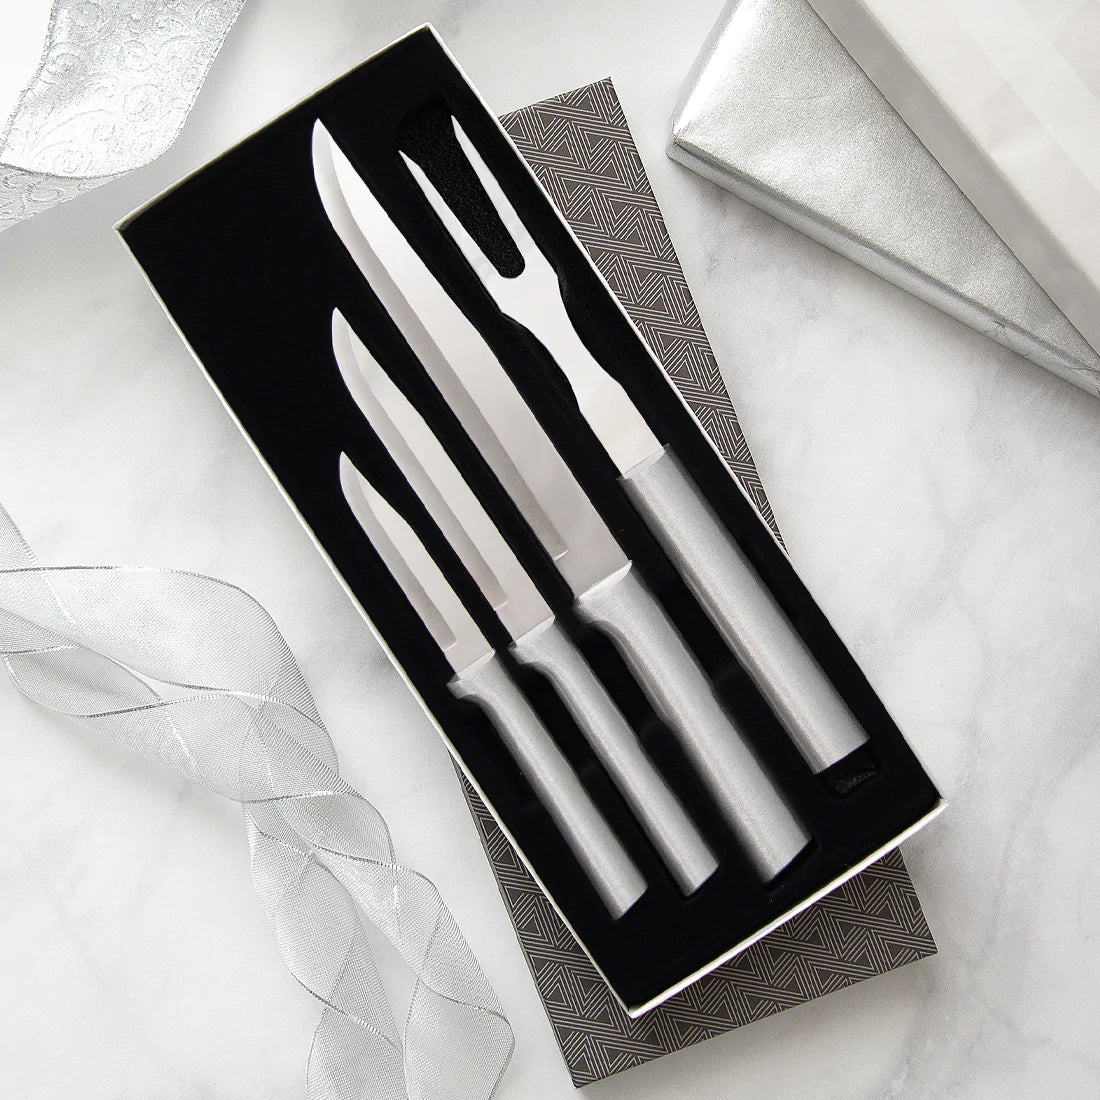  Rada Cutlery 4-Piece Utility Steak Knife Set